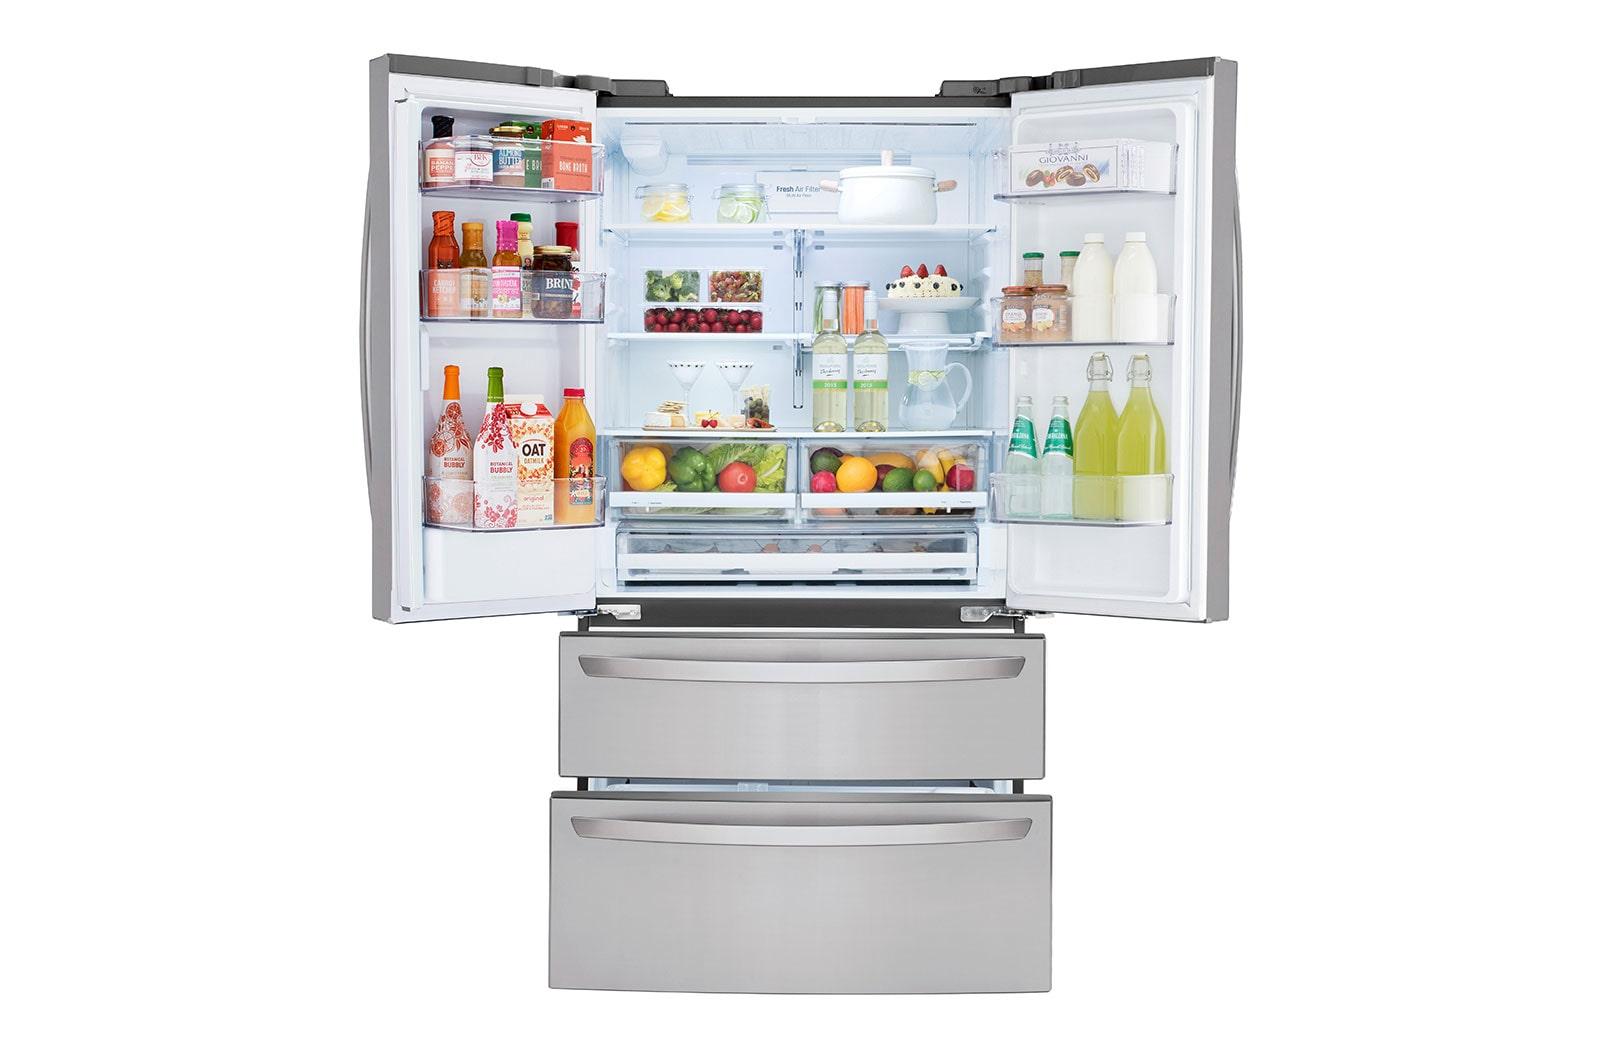 LRFWS2906S by LG - 29 cu ft. French Door Refrigerator with Slim Design  Water Dispenser